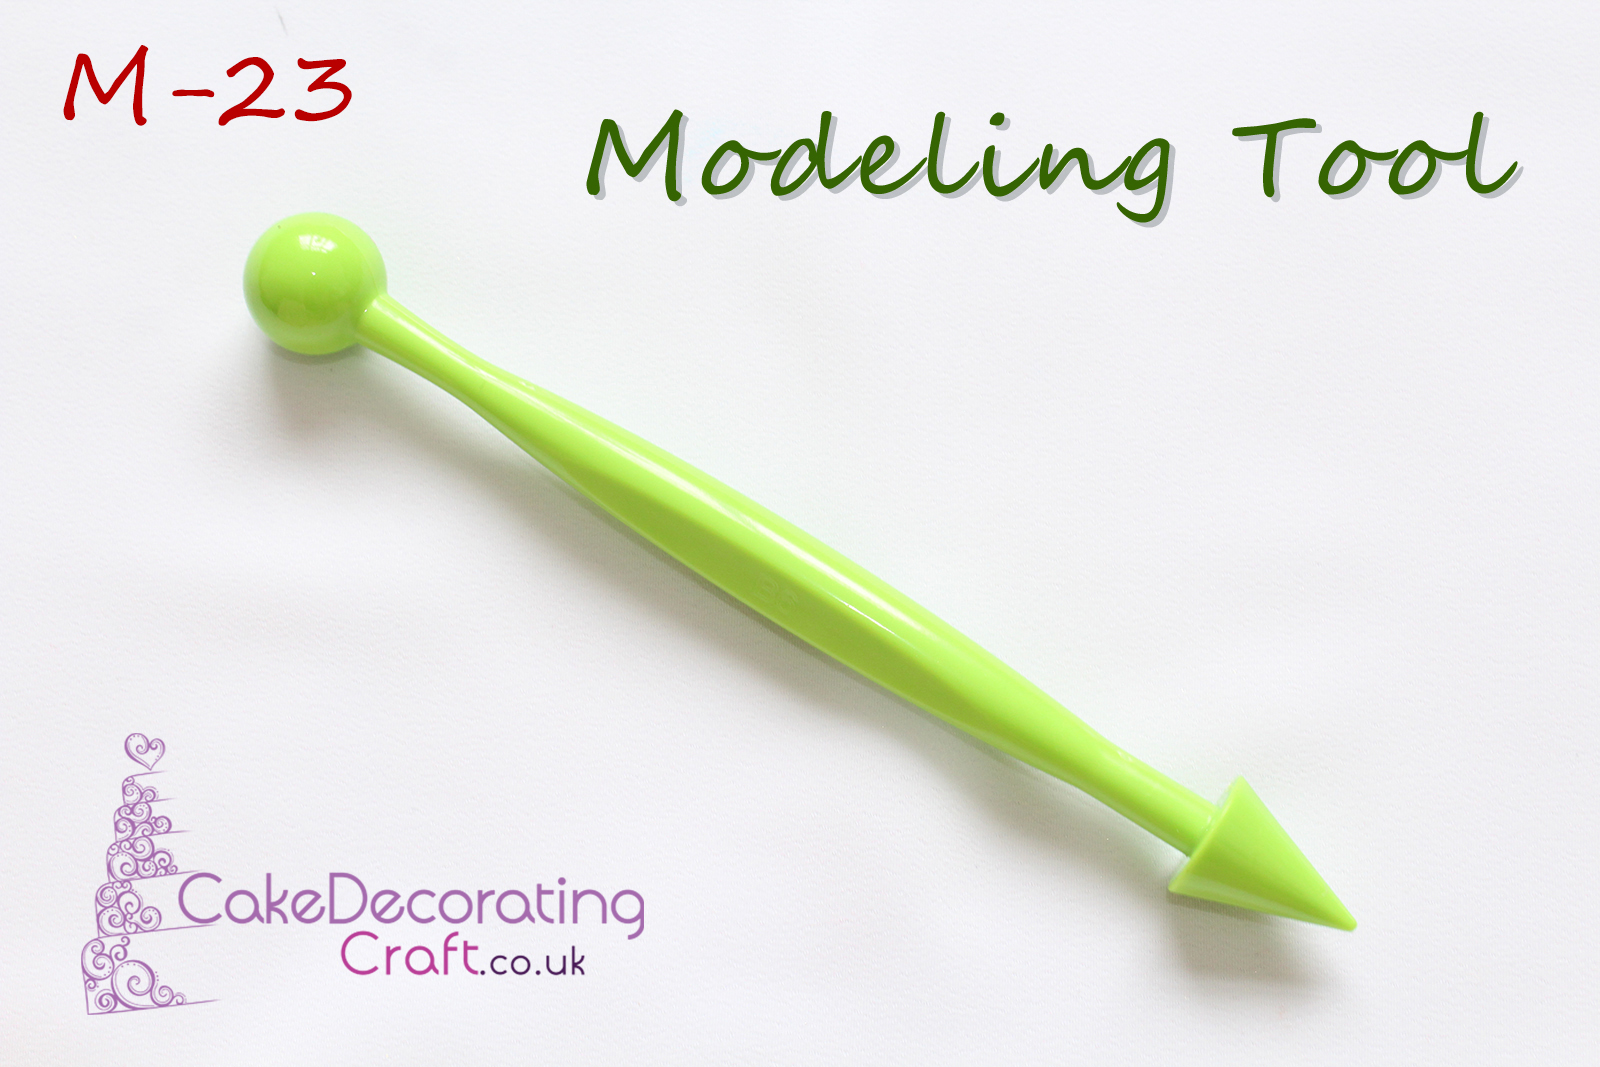 Cake Decorating Craft Modelling Tools | Double Ended | Gum Paste Flower Paste Modelling Sugar Paste Craft | M-23